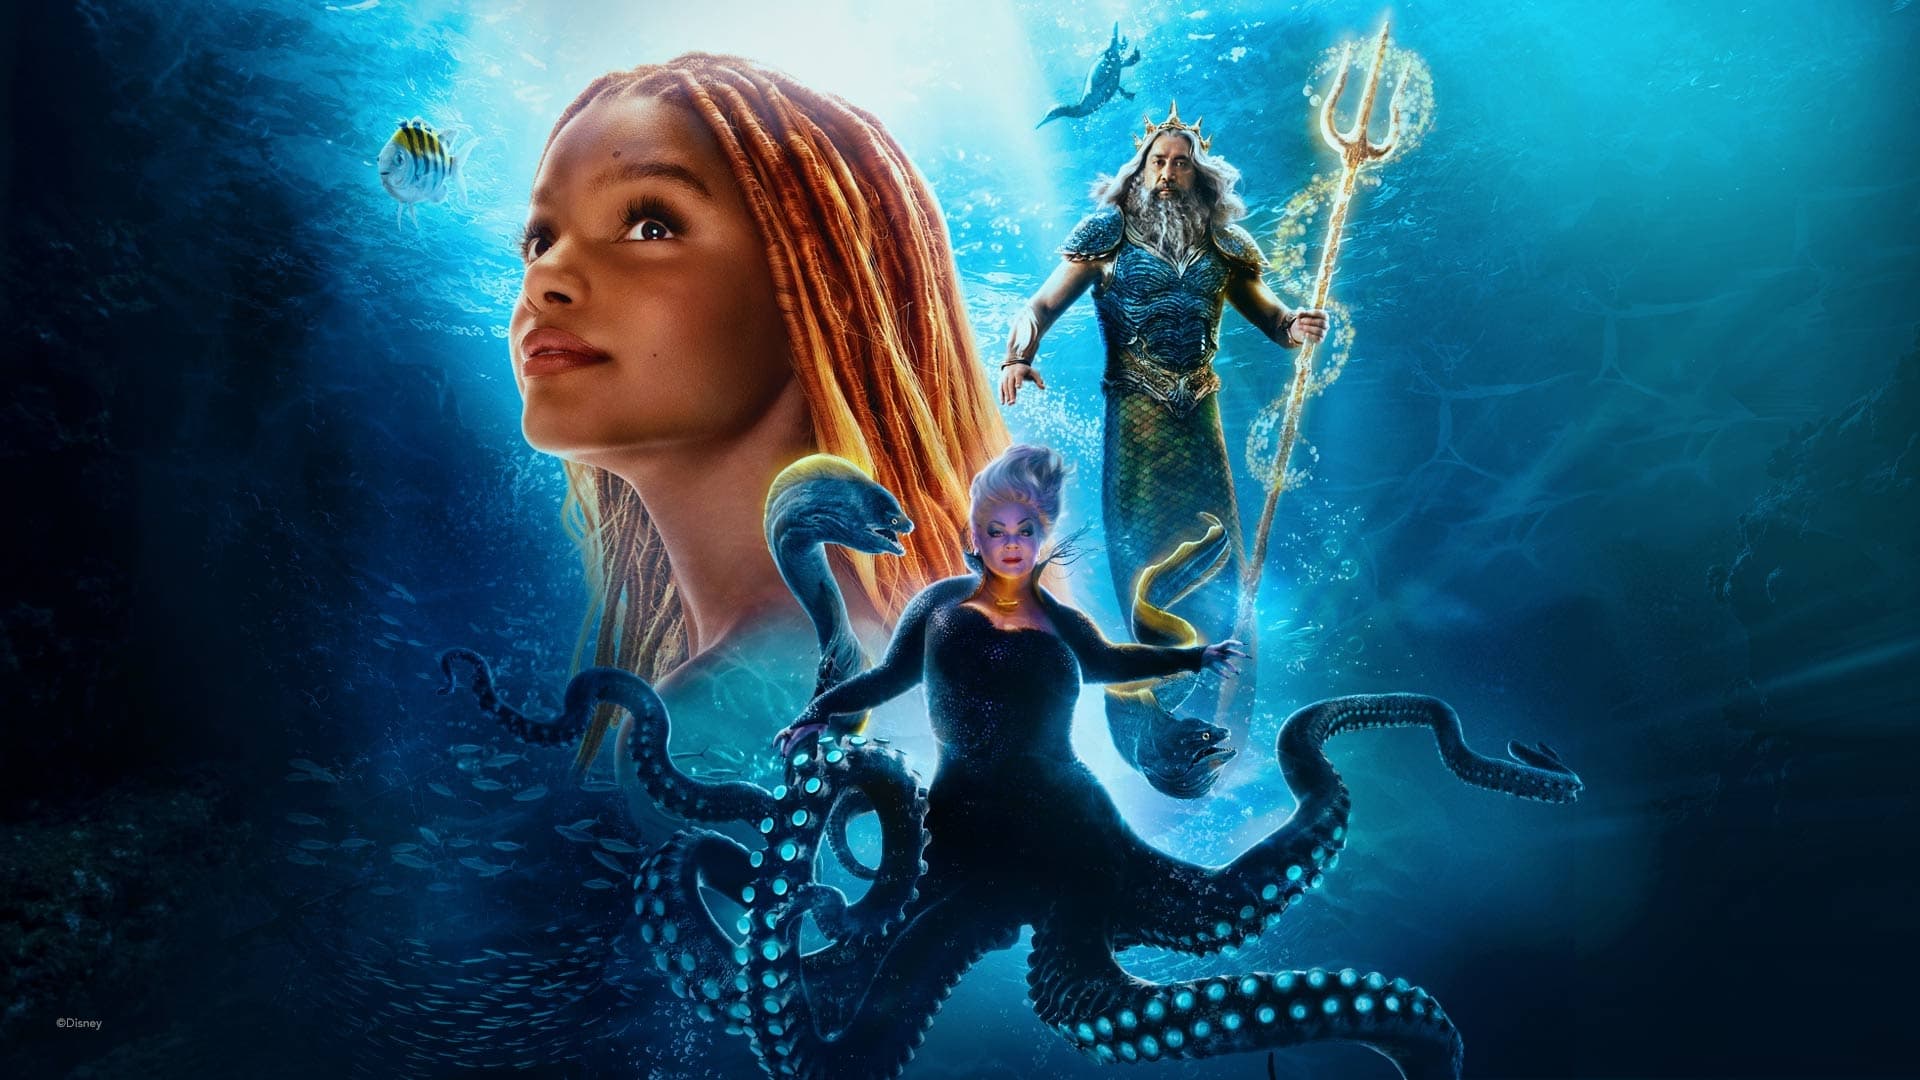 The Little Mermaid (2023)